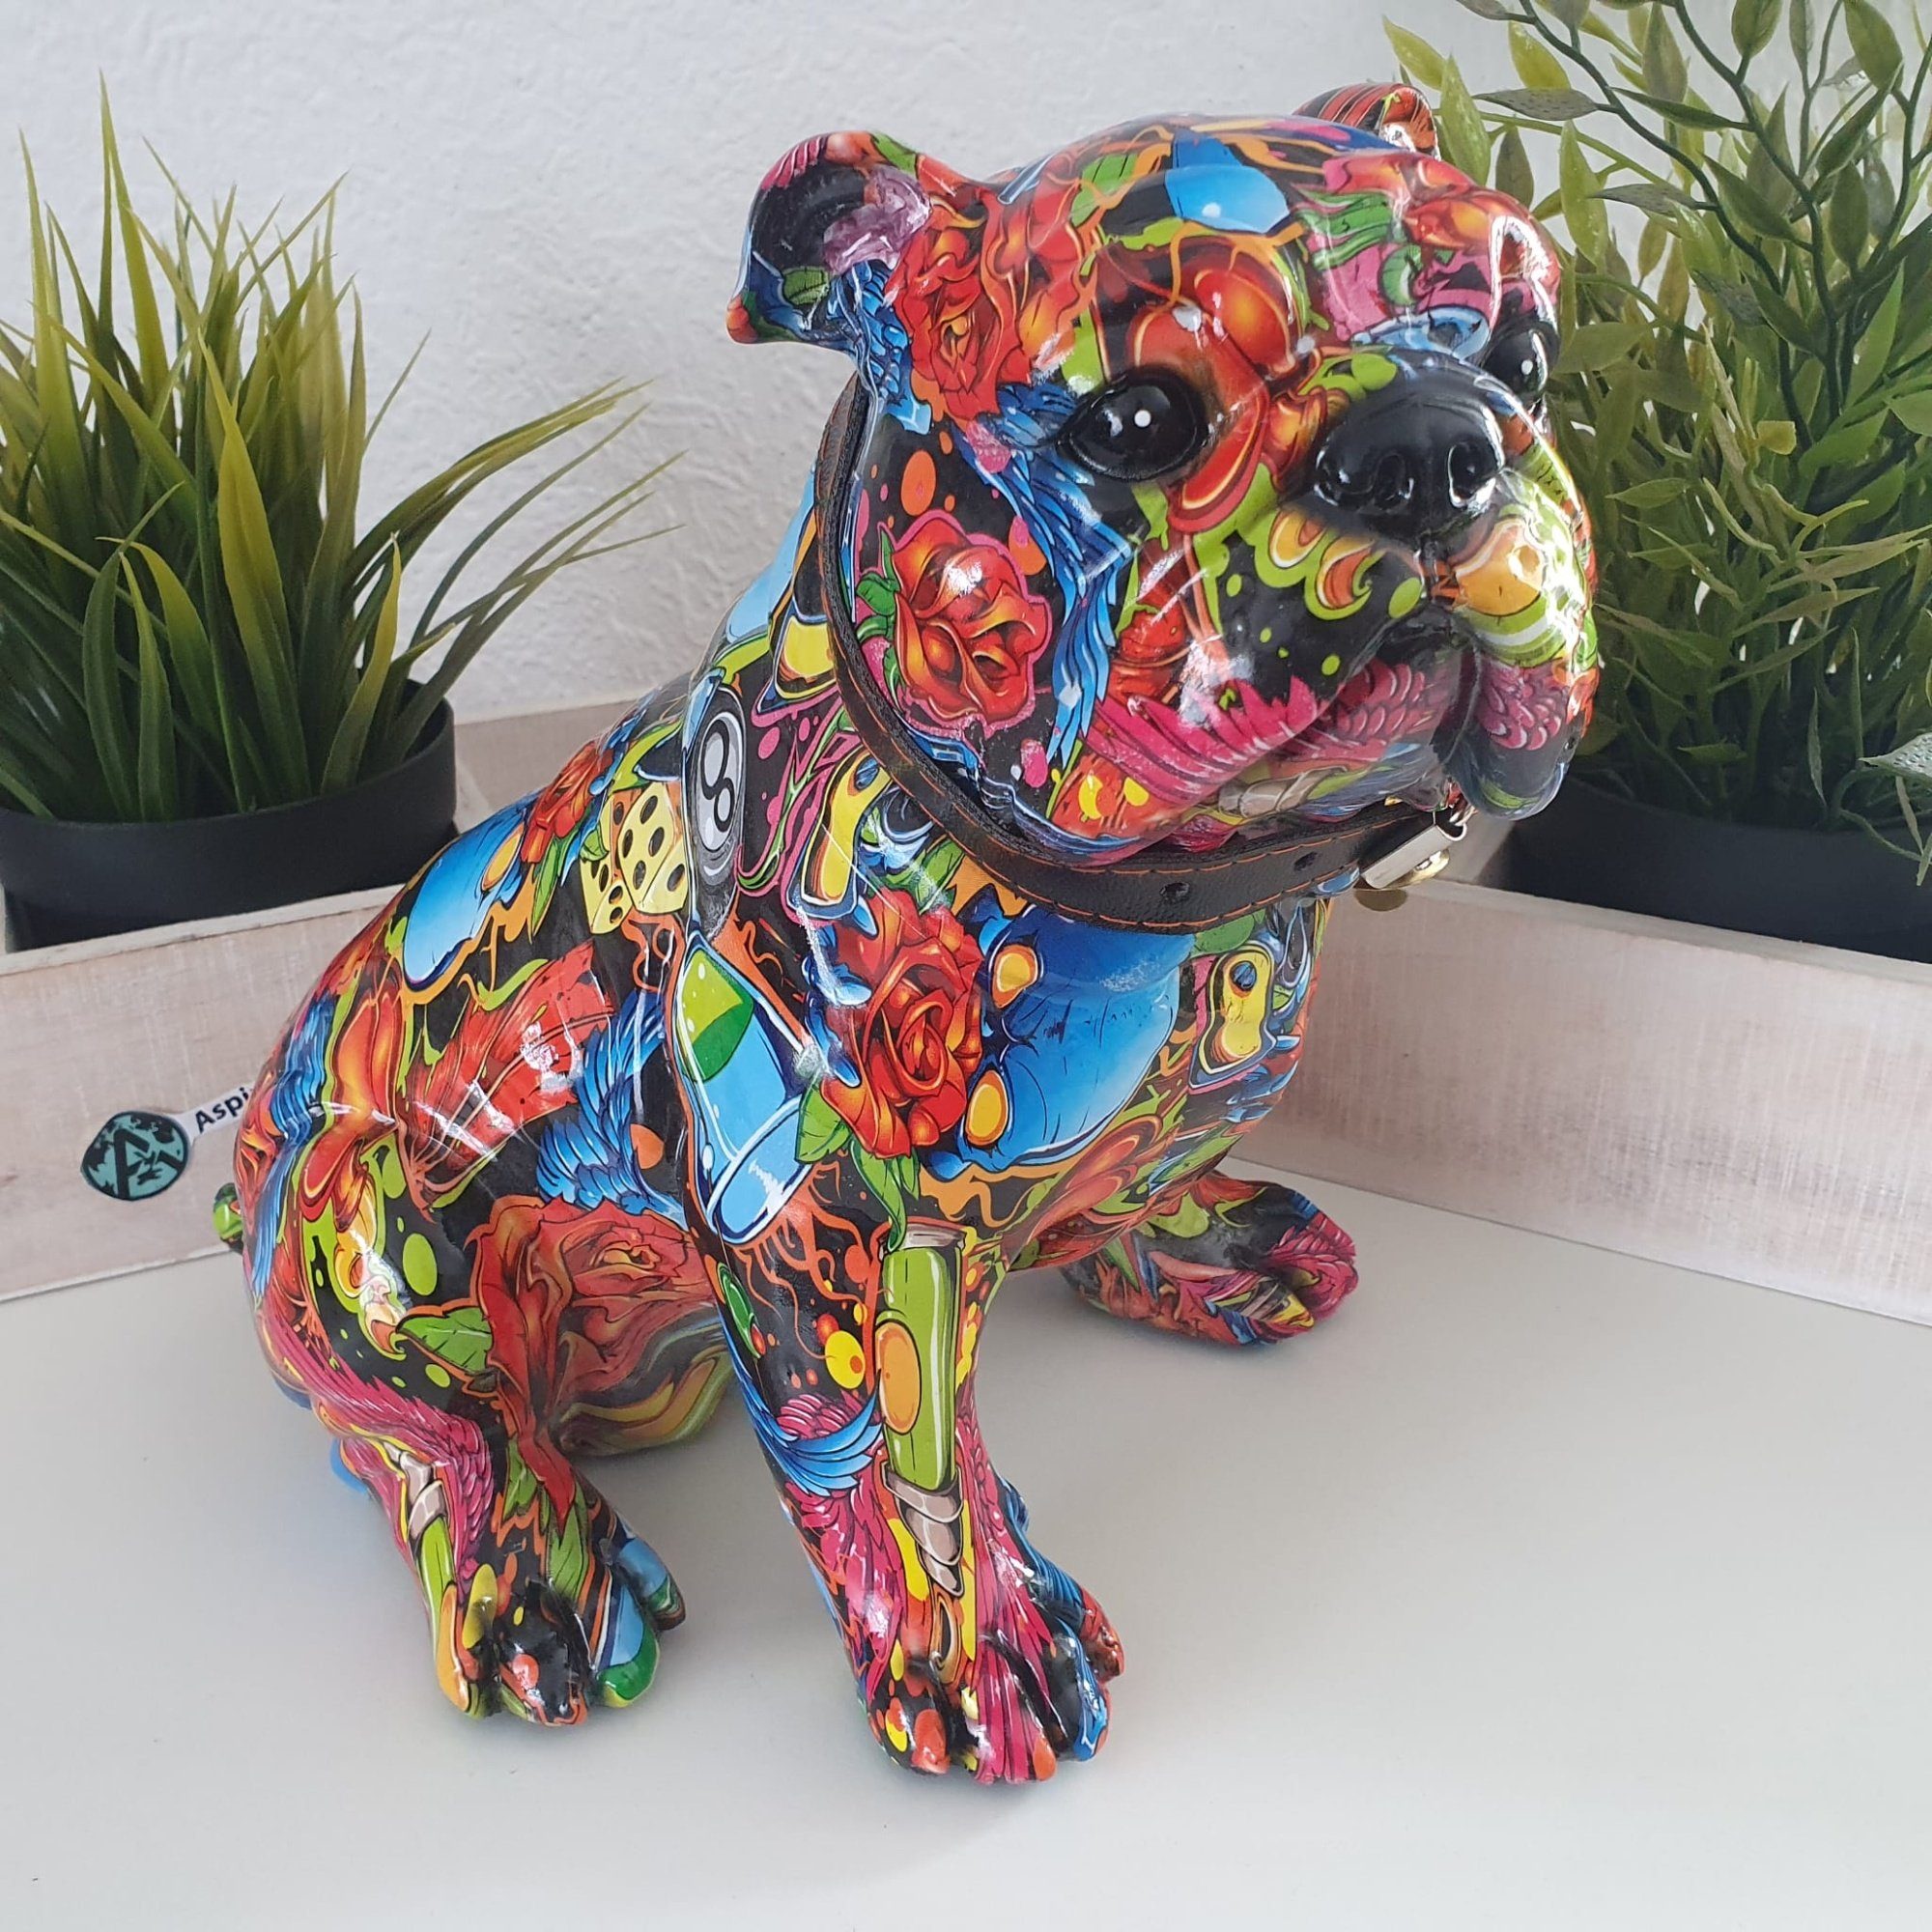 Figur style Aspinaworld Dekofigur 22 Art Street Hunde Mops Graffiti cm